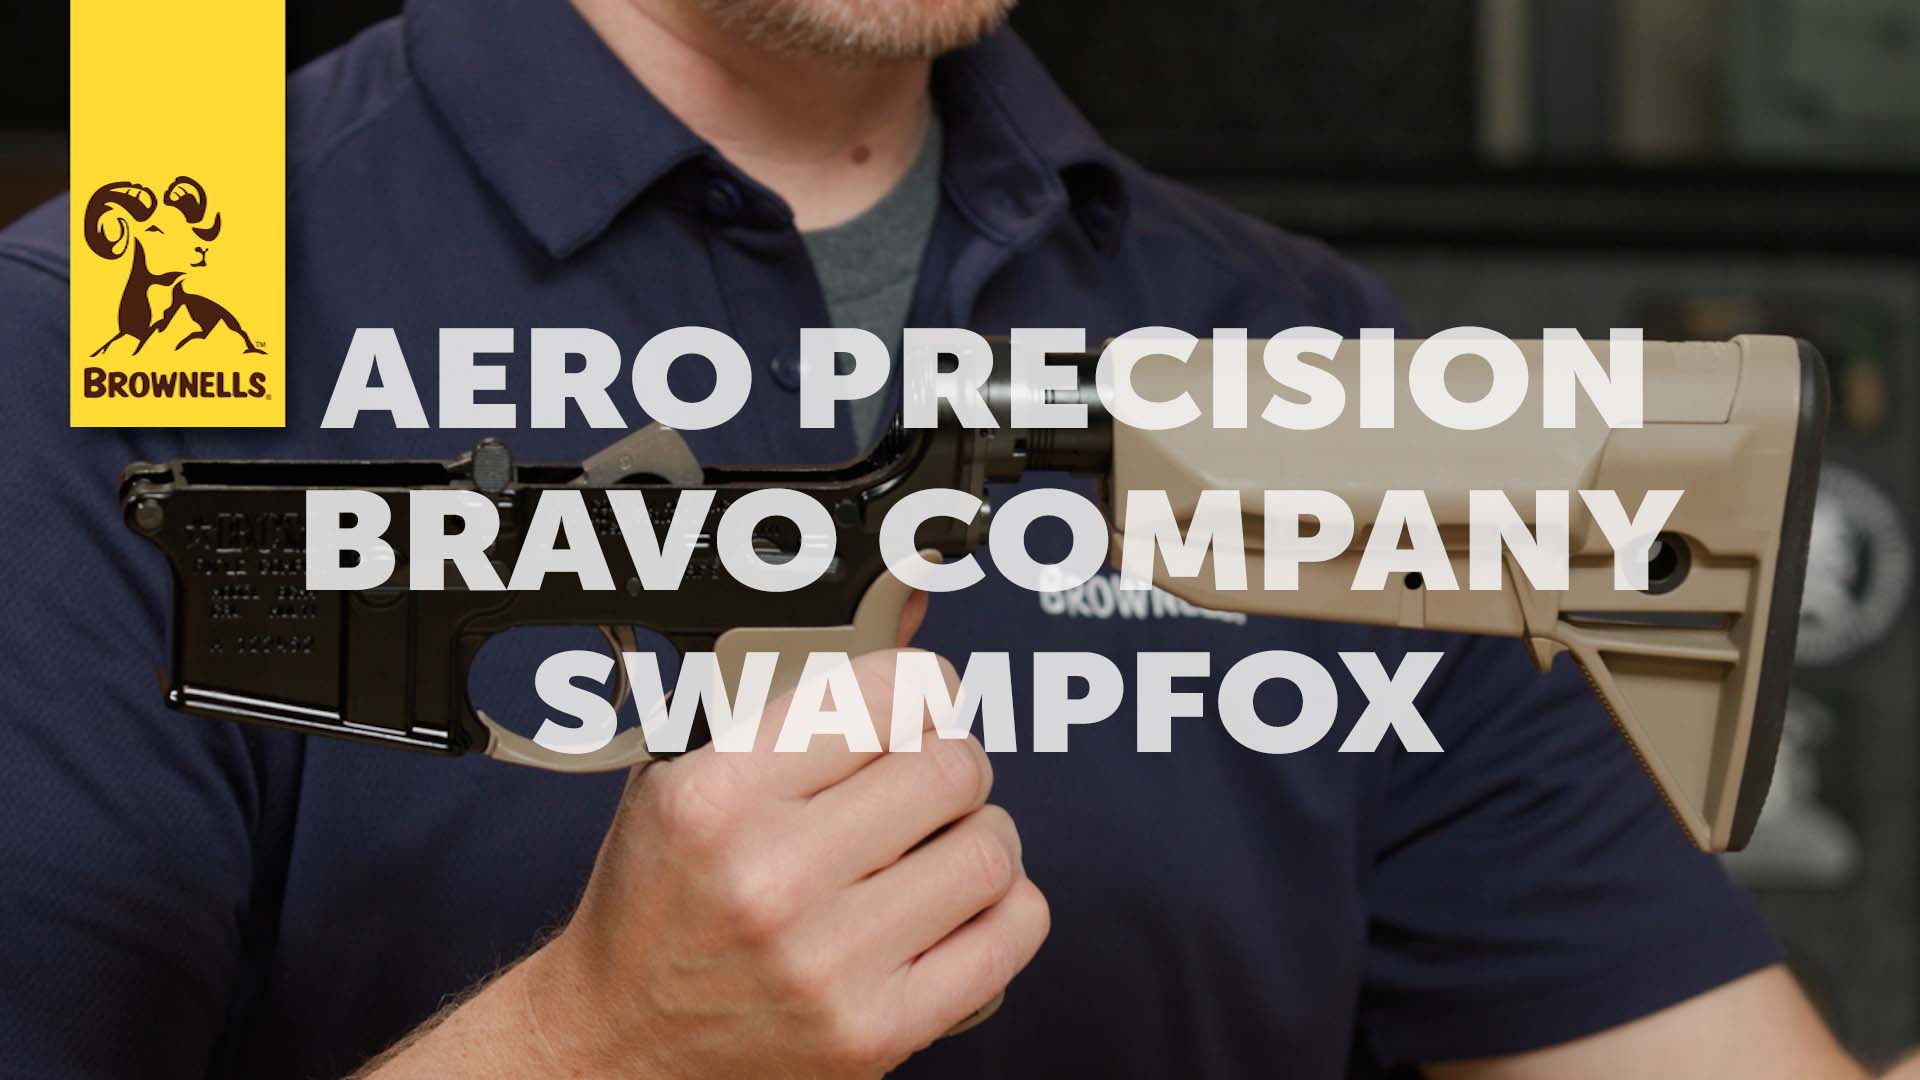 New Products: Aero Precision, Bravo Company & Swampfox